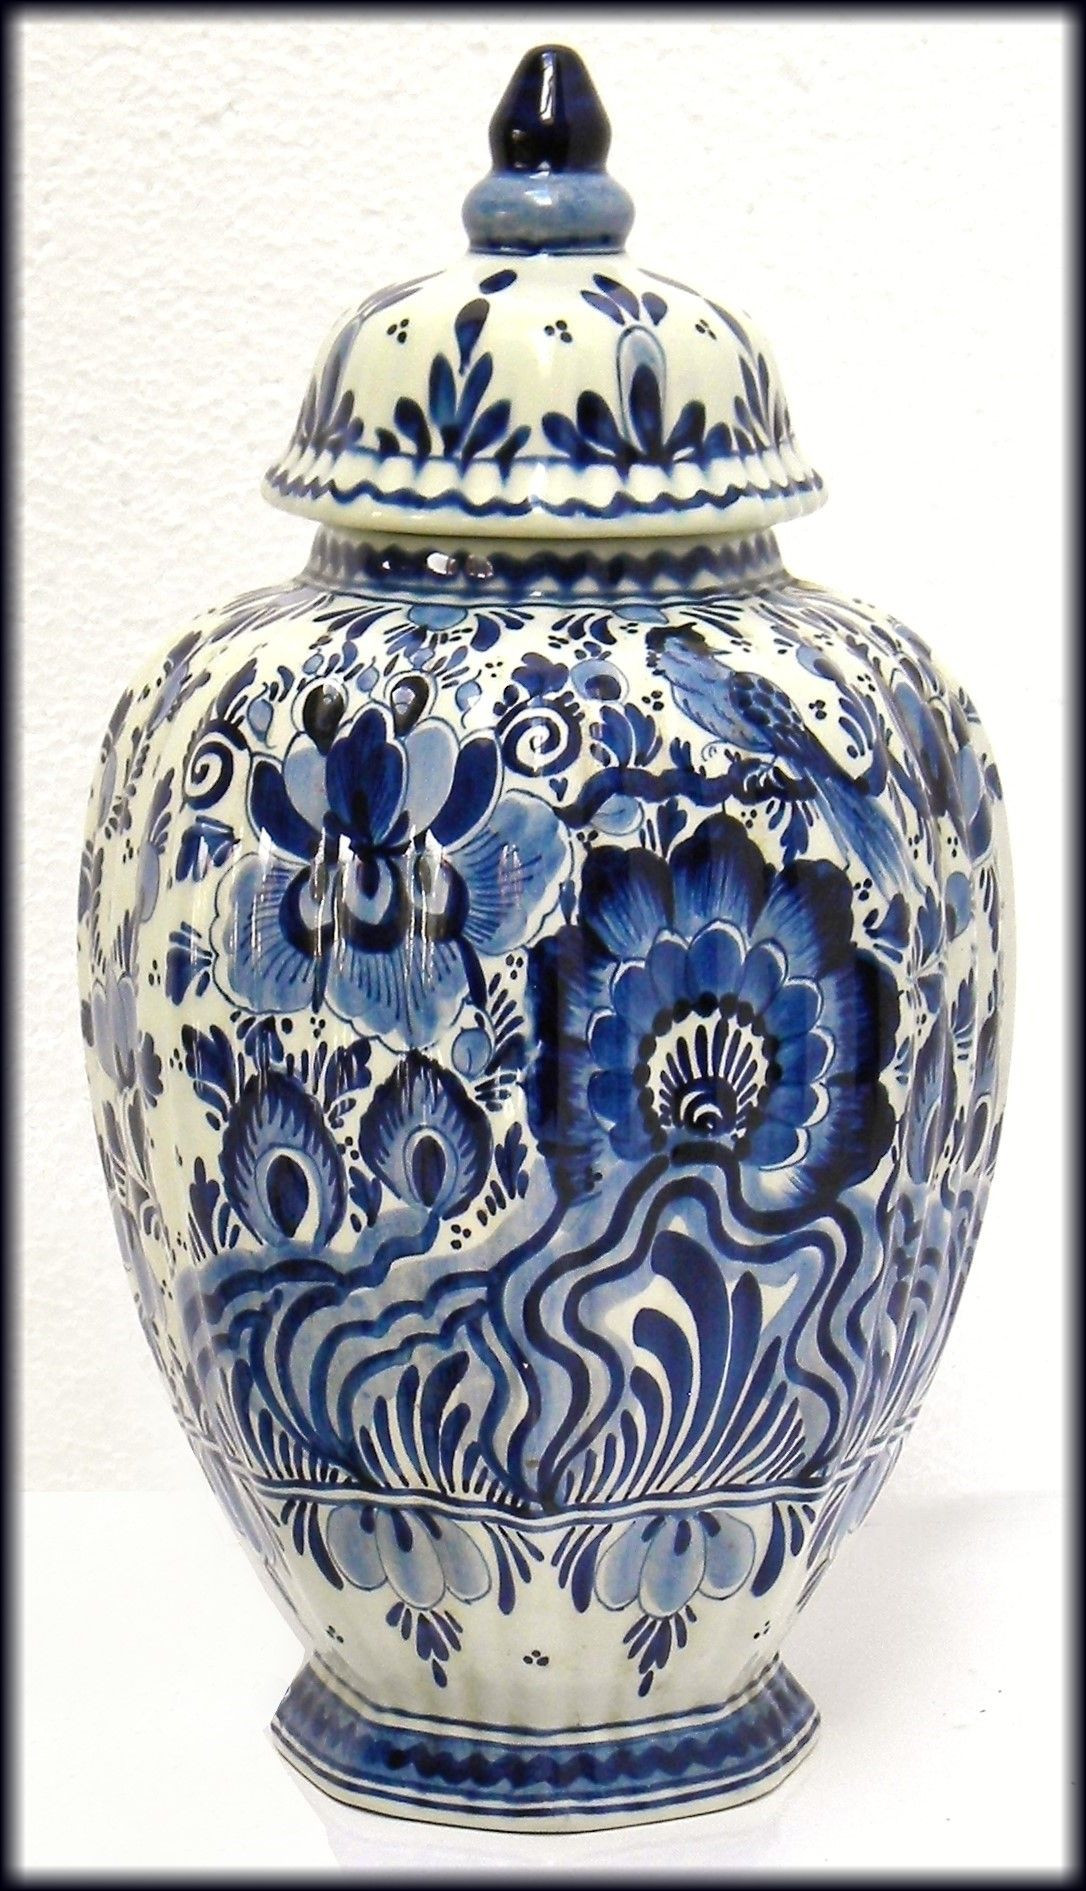 pink and white ceramic vase of vintage delft blue ceramic vase jar hand painted cobalt blue floral within amazing delft blue vintage dutch art pottery with cobalt blue bird and floral decoration